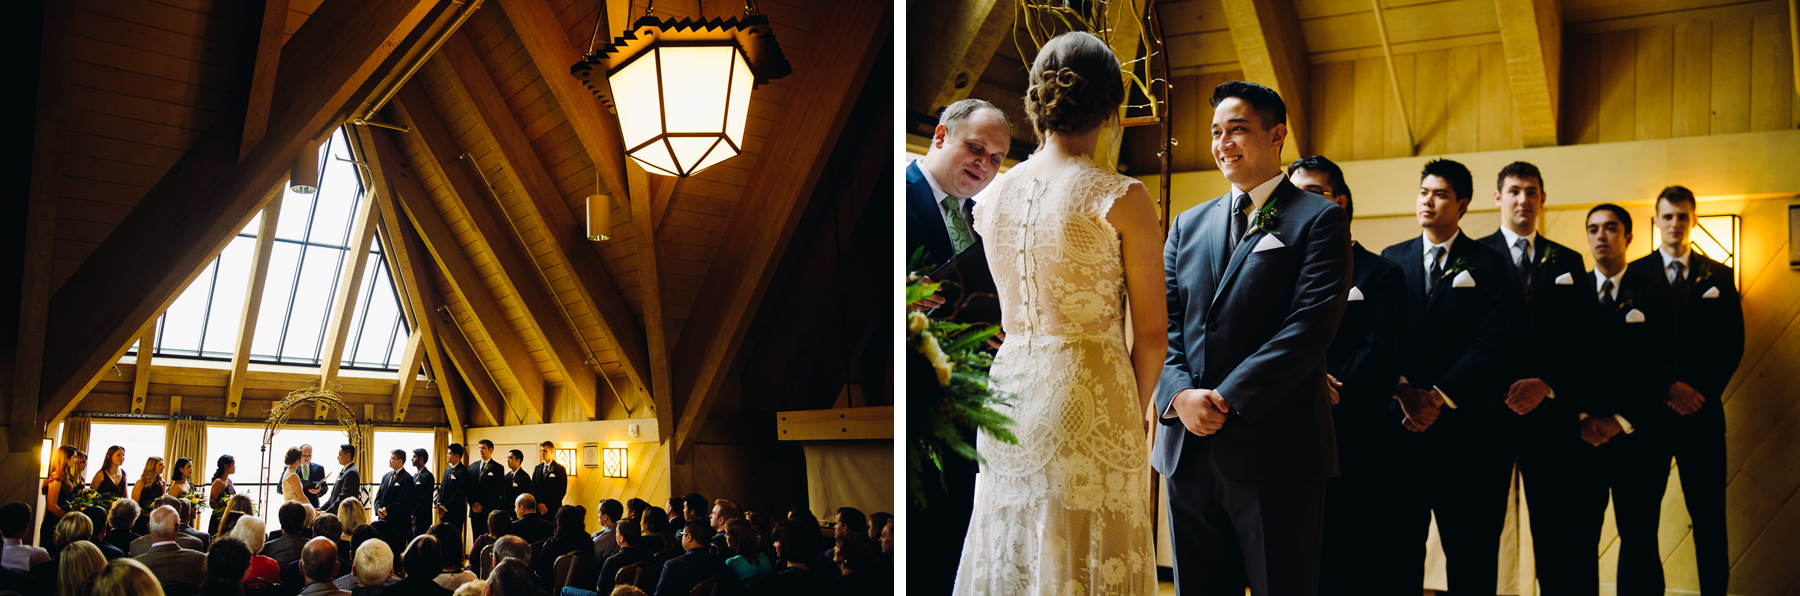 timberline-lodge-wedding-photos-15